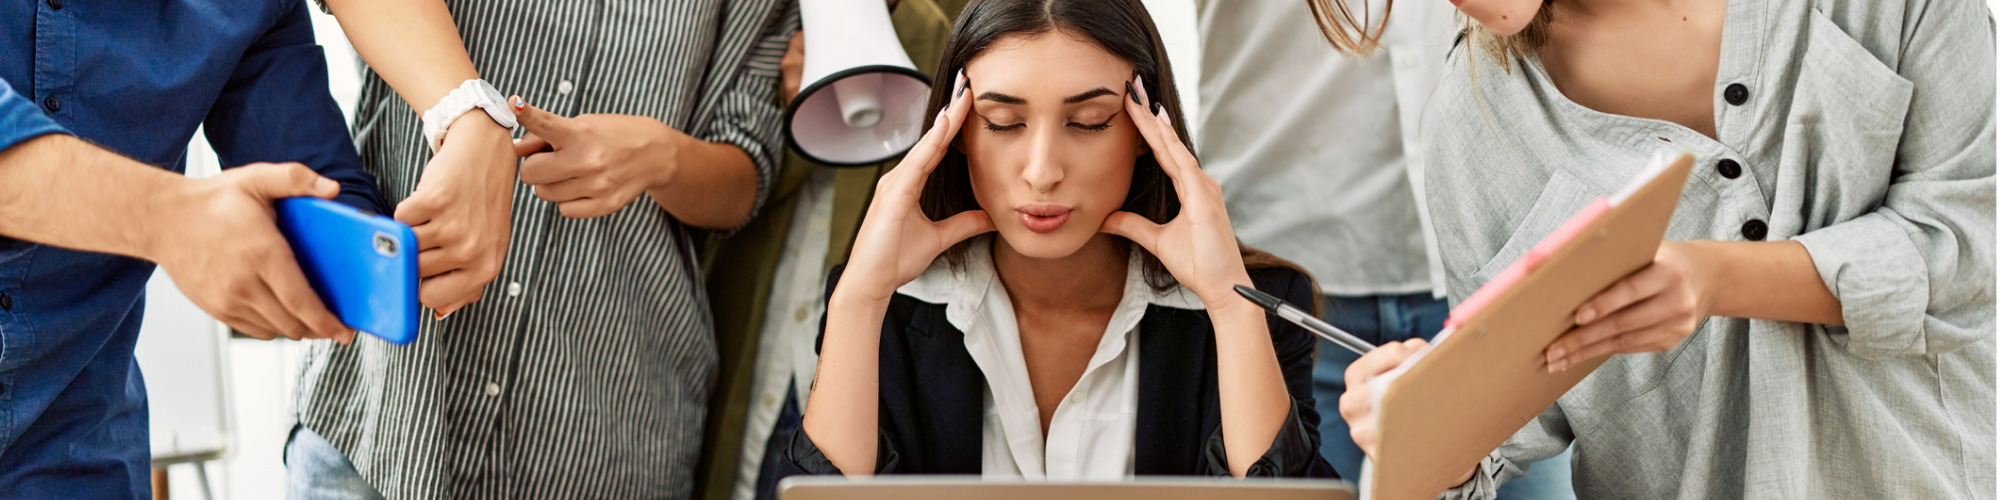 Stress Claims & Employment Litigation - The Key Factors for Legal Advisers & HR Professionals